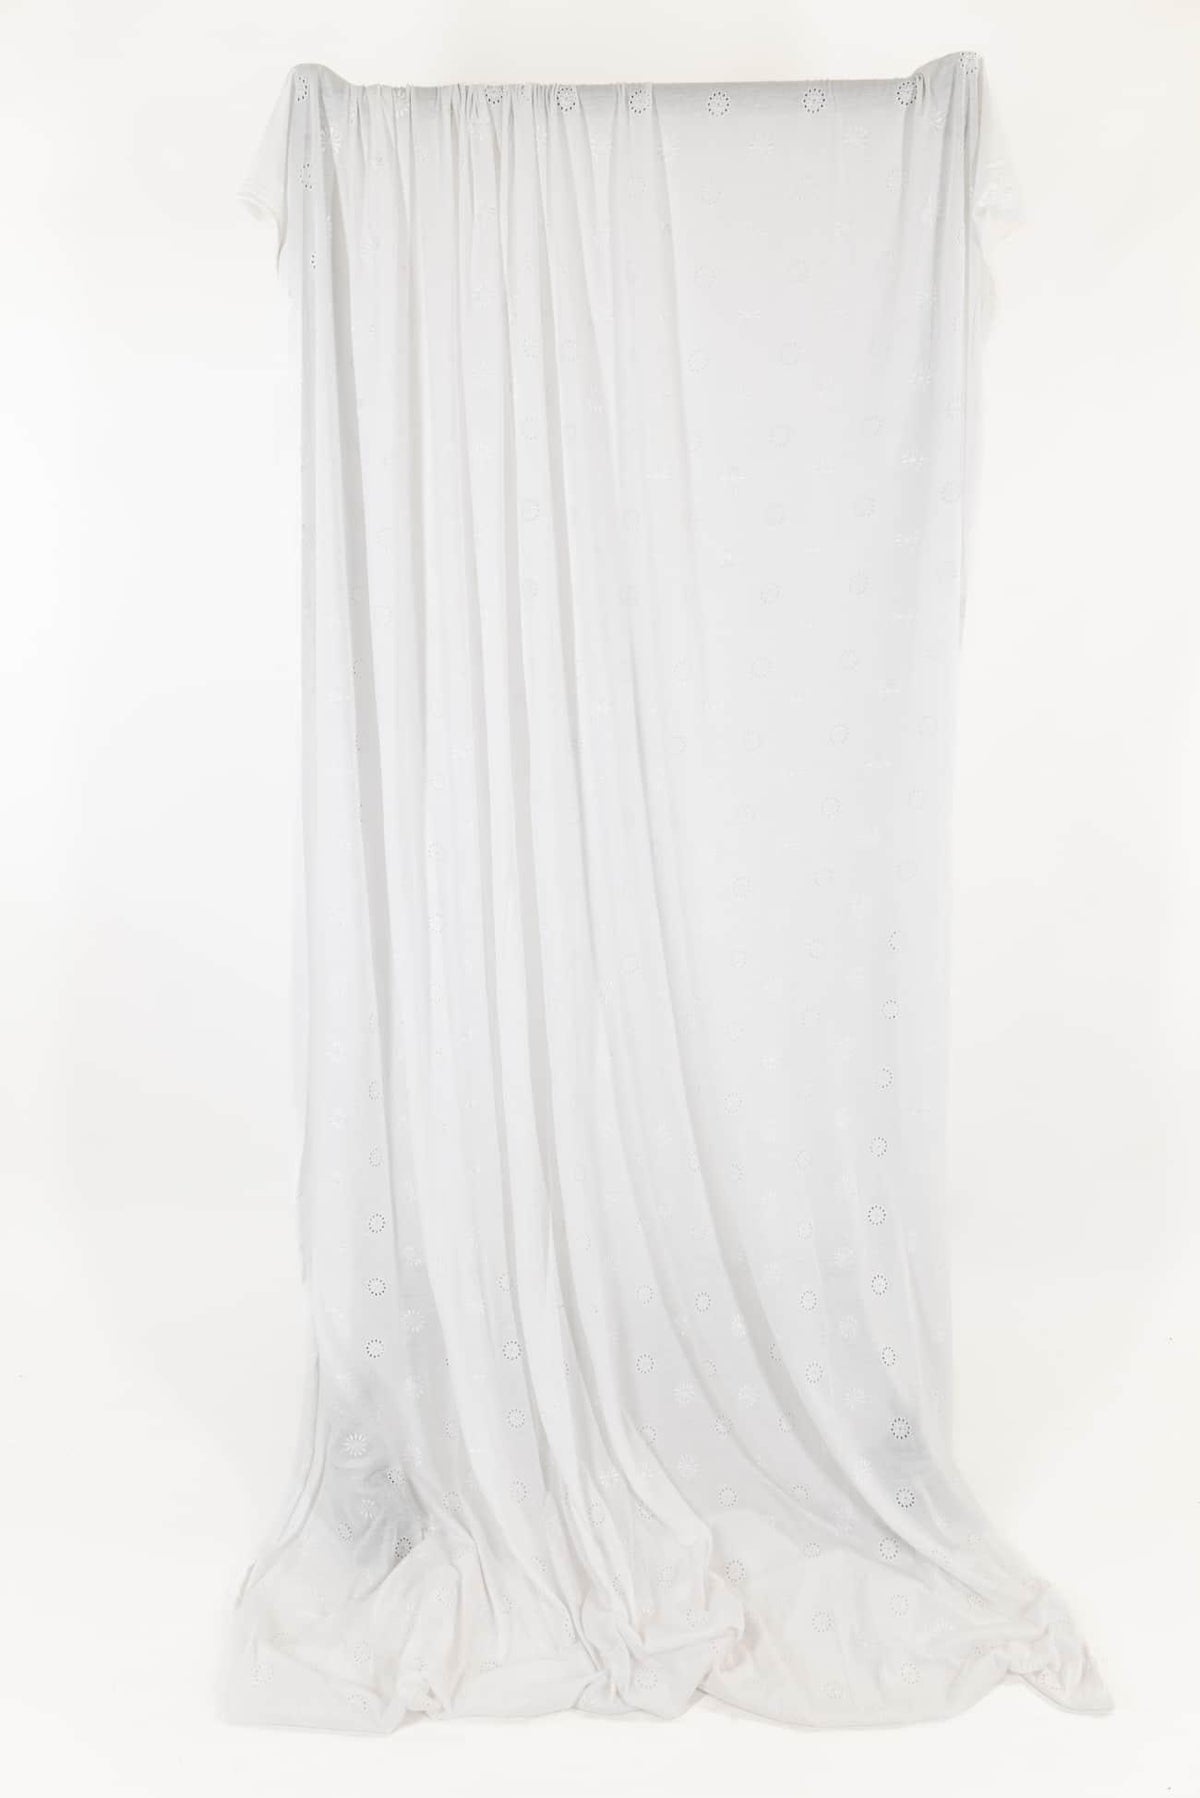 Snowdrop Embroidered Eyelet White Knit - Marcy Tilton Fabrics